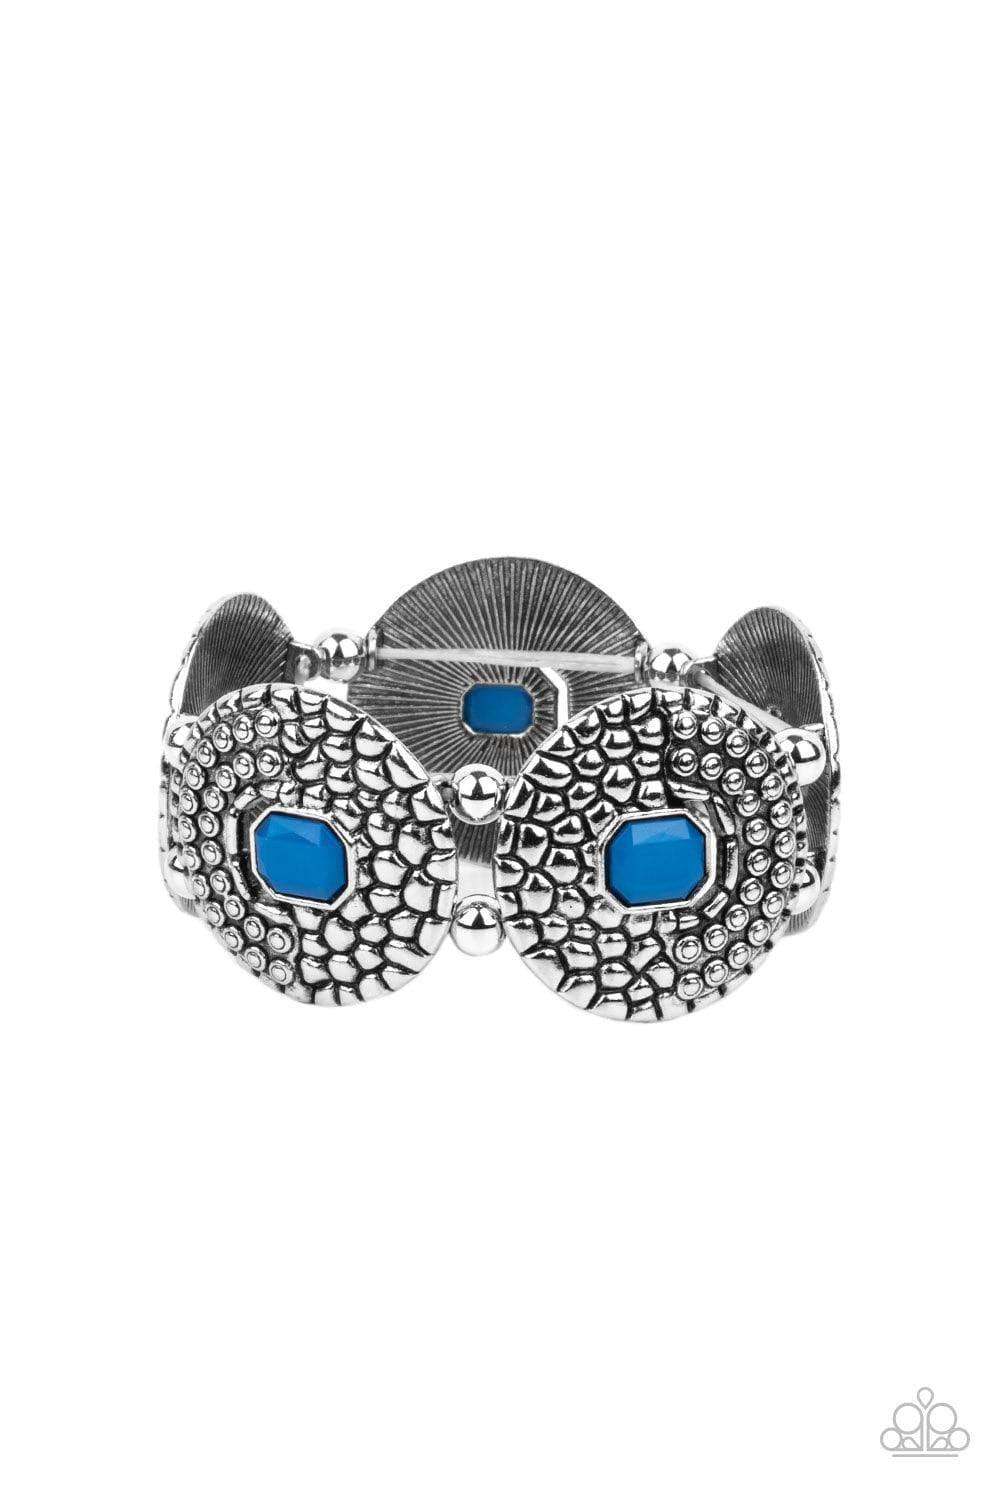 Paparazzi Accessories - Prismatic Prowl - Blue Bracelet - Bling by JessieK